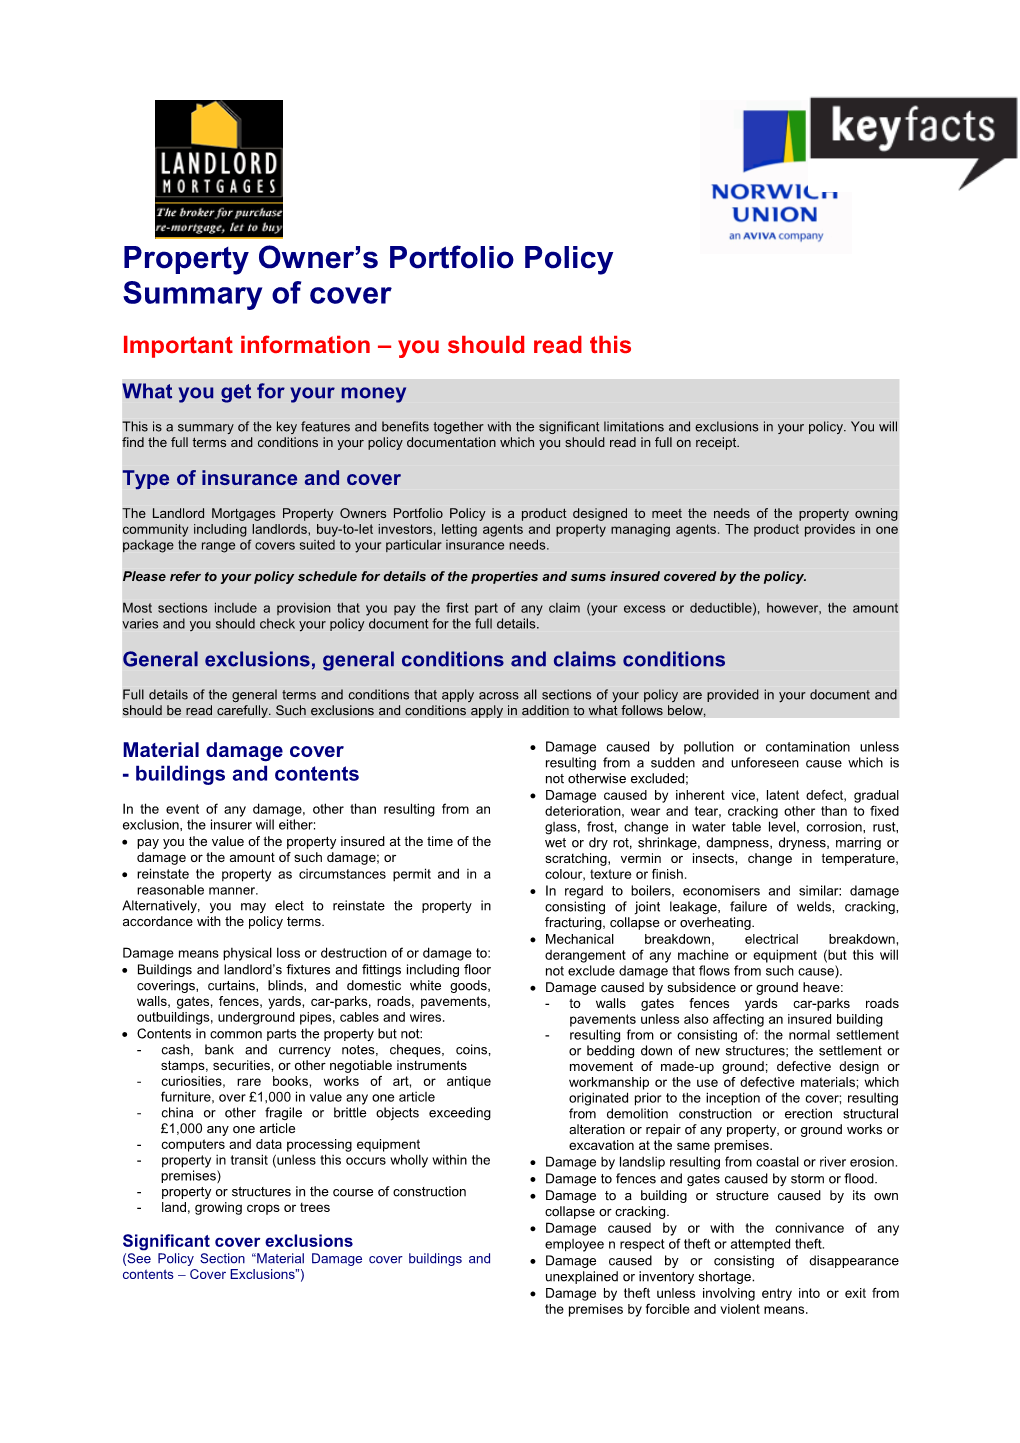 Norwich Union - Property Owners Portfolio Insurance Policy